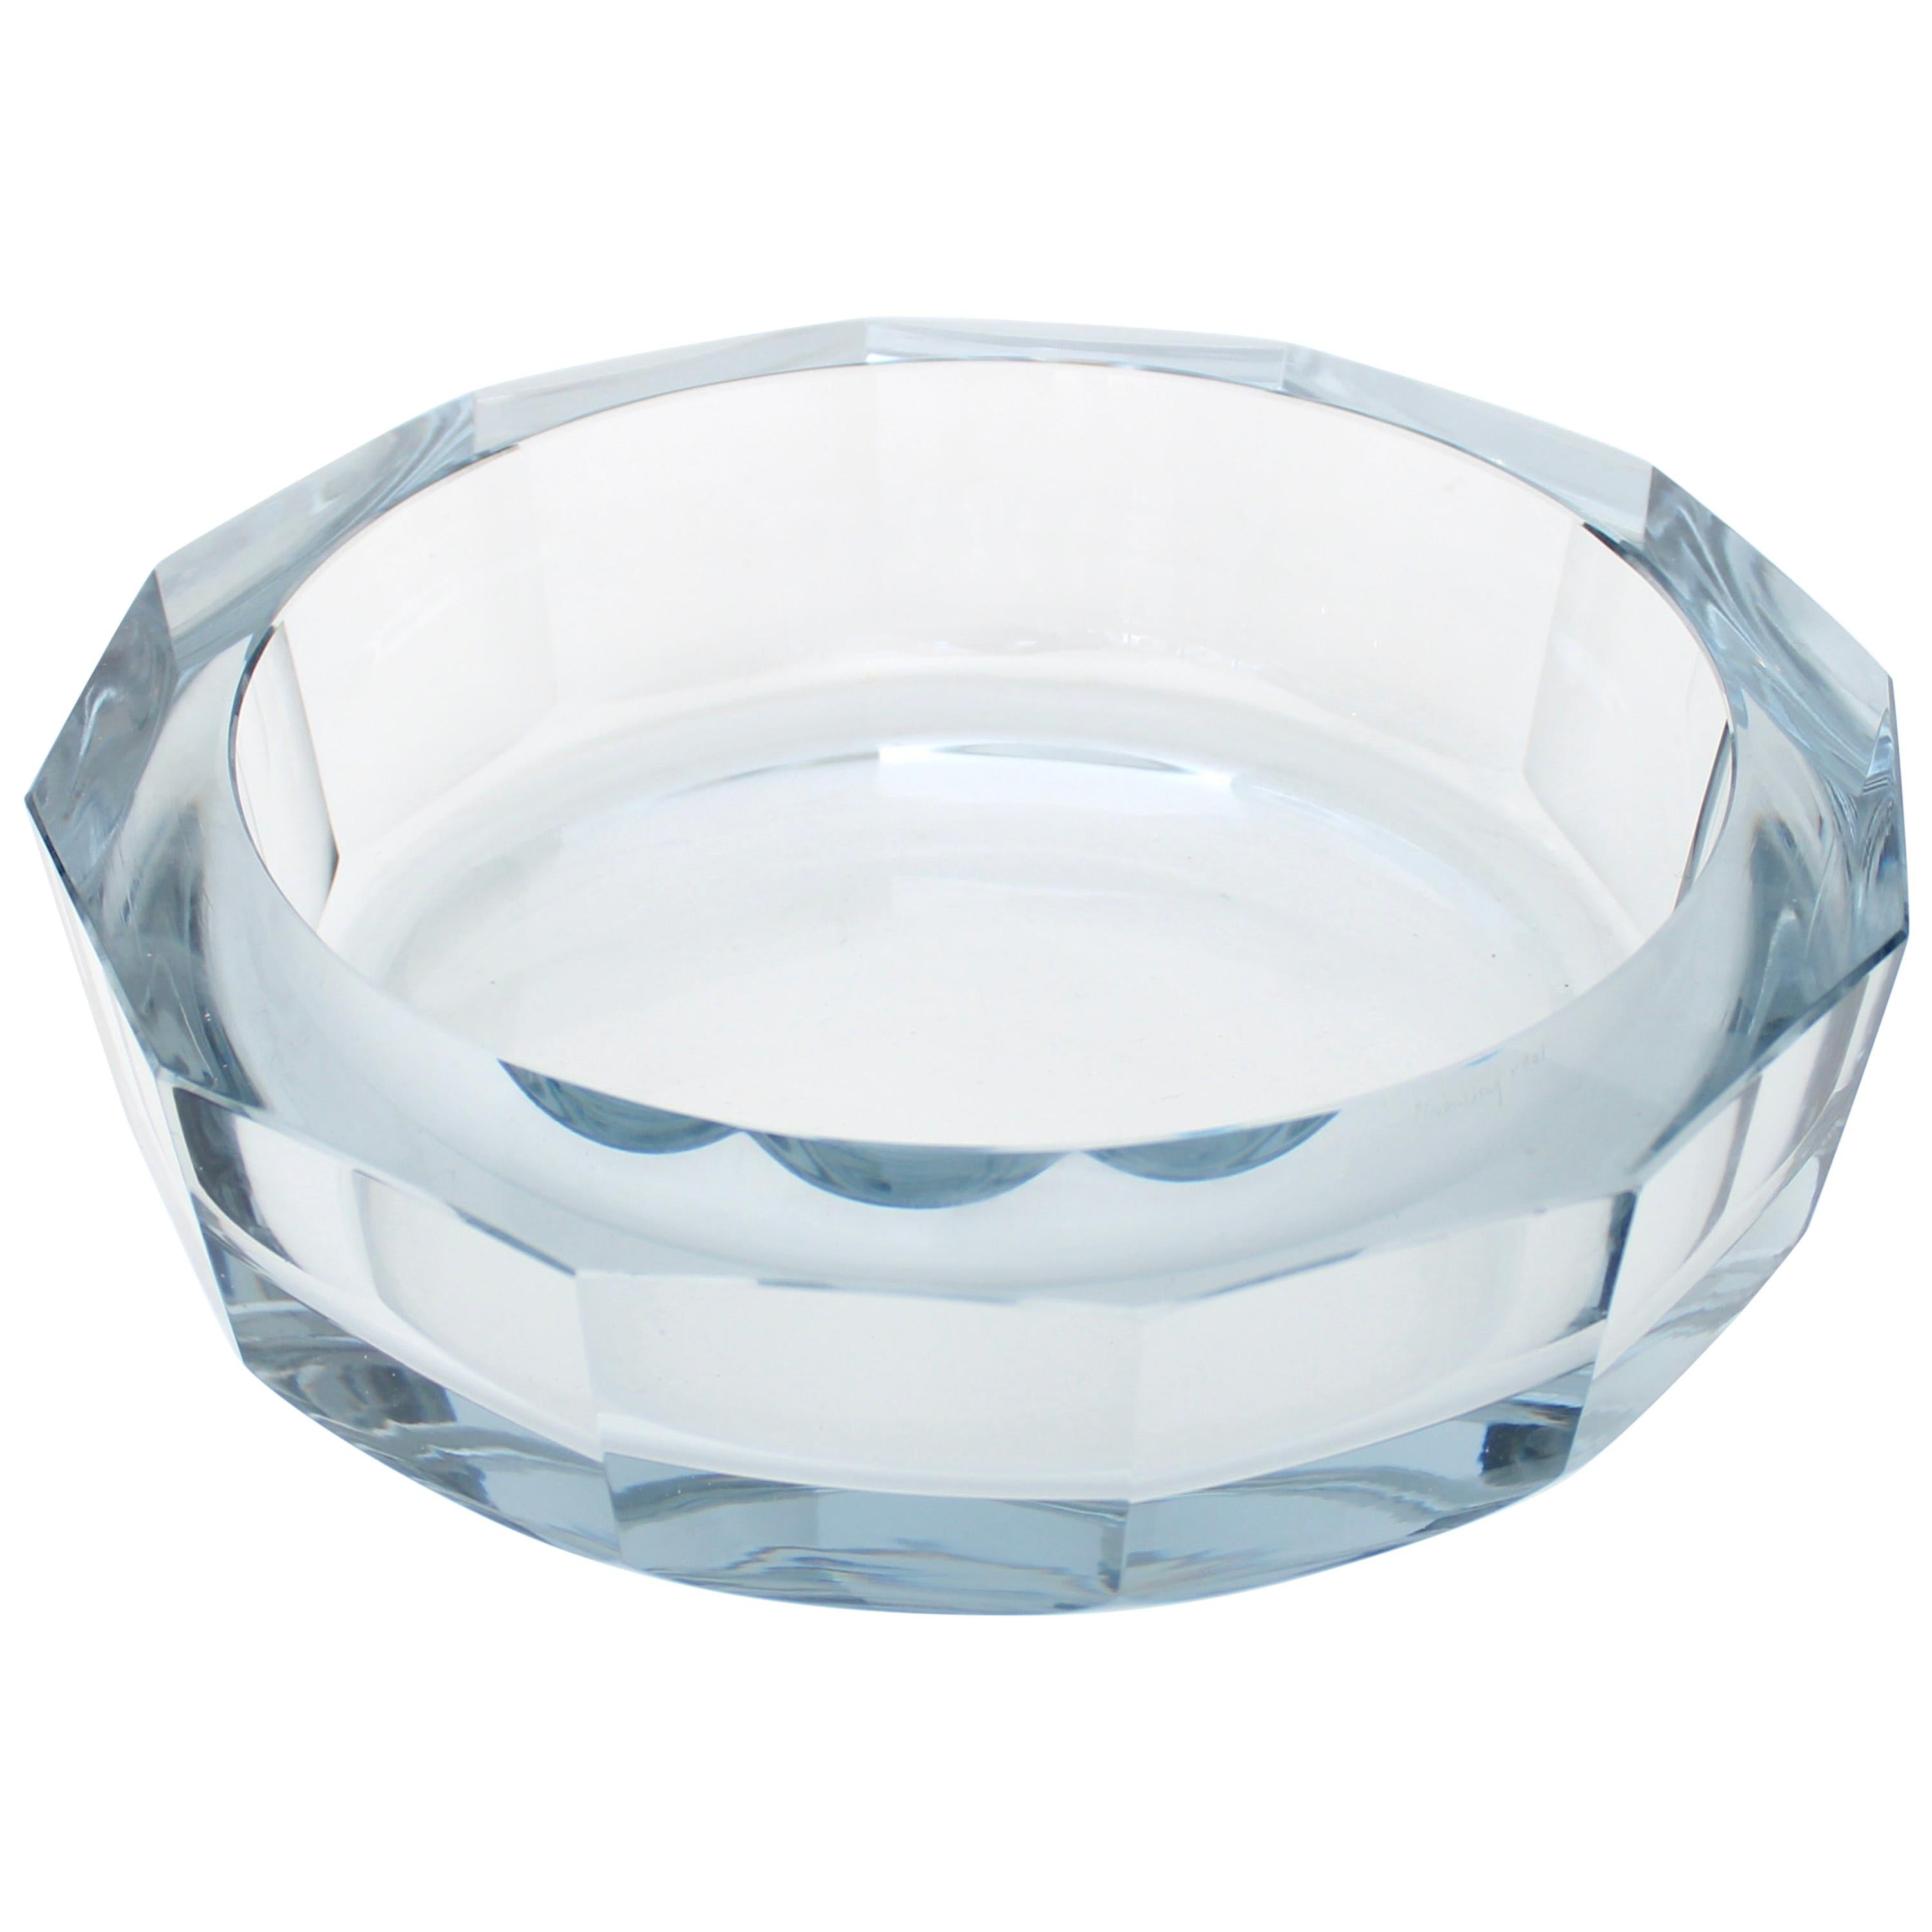 Diamond Cut Glass Dish by Strömberg Sweden Designed by Aste Stromberg circa 1950